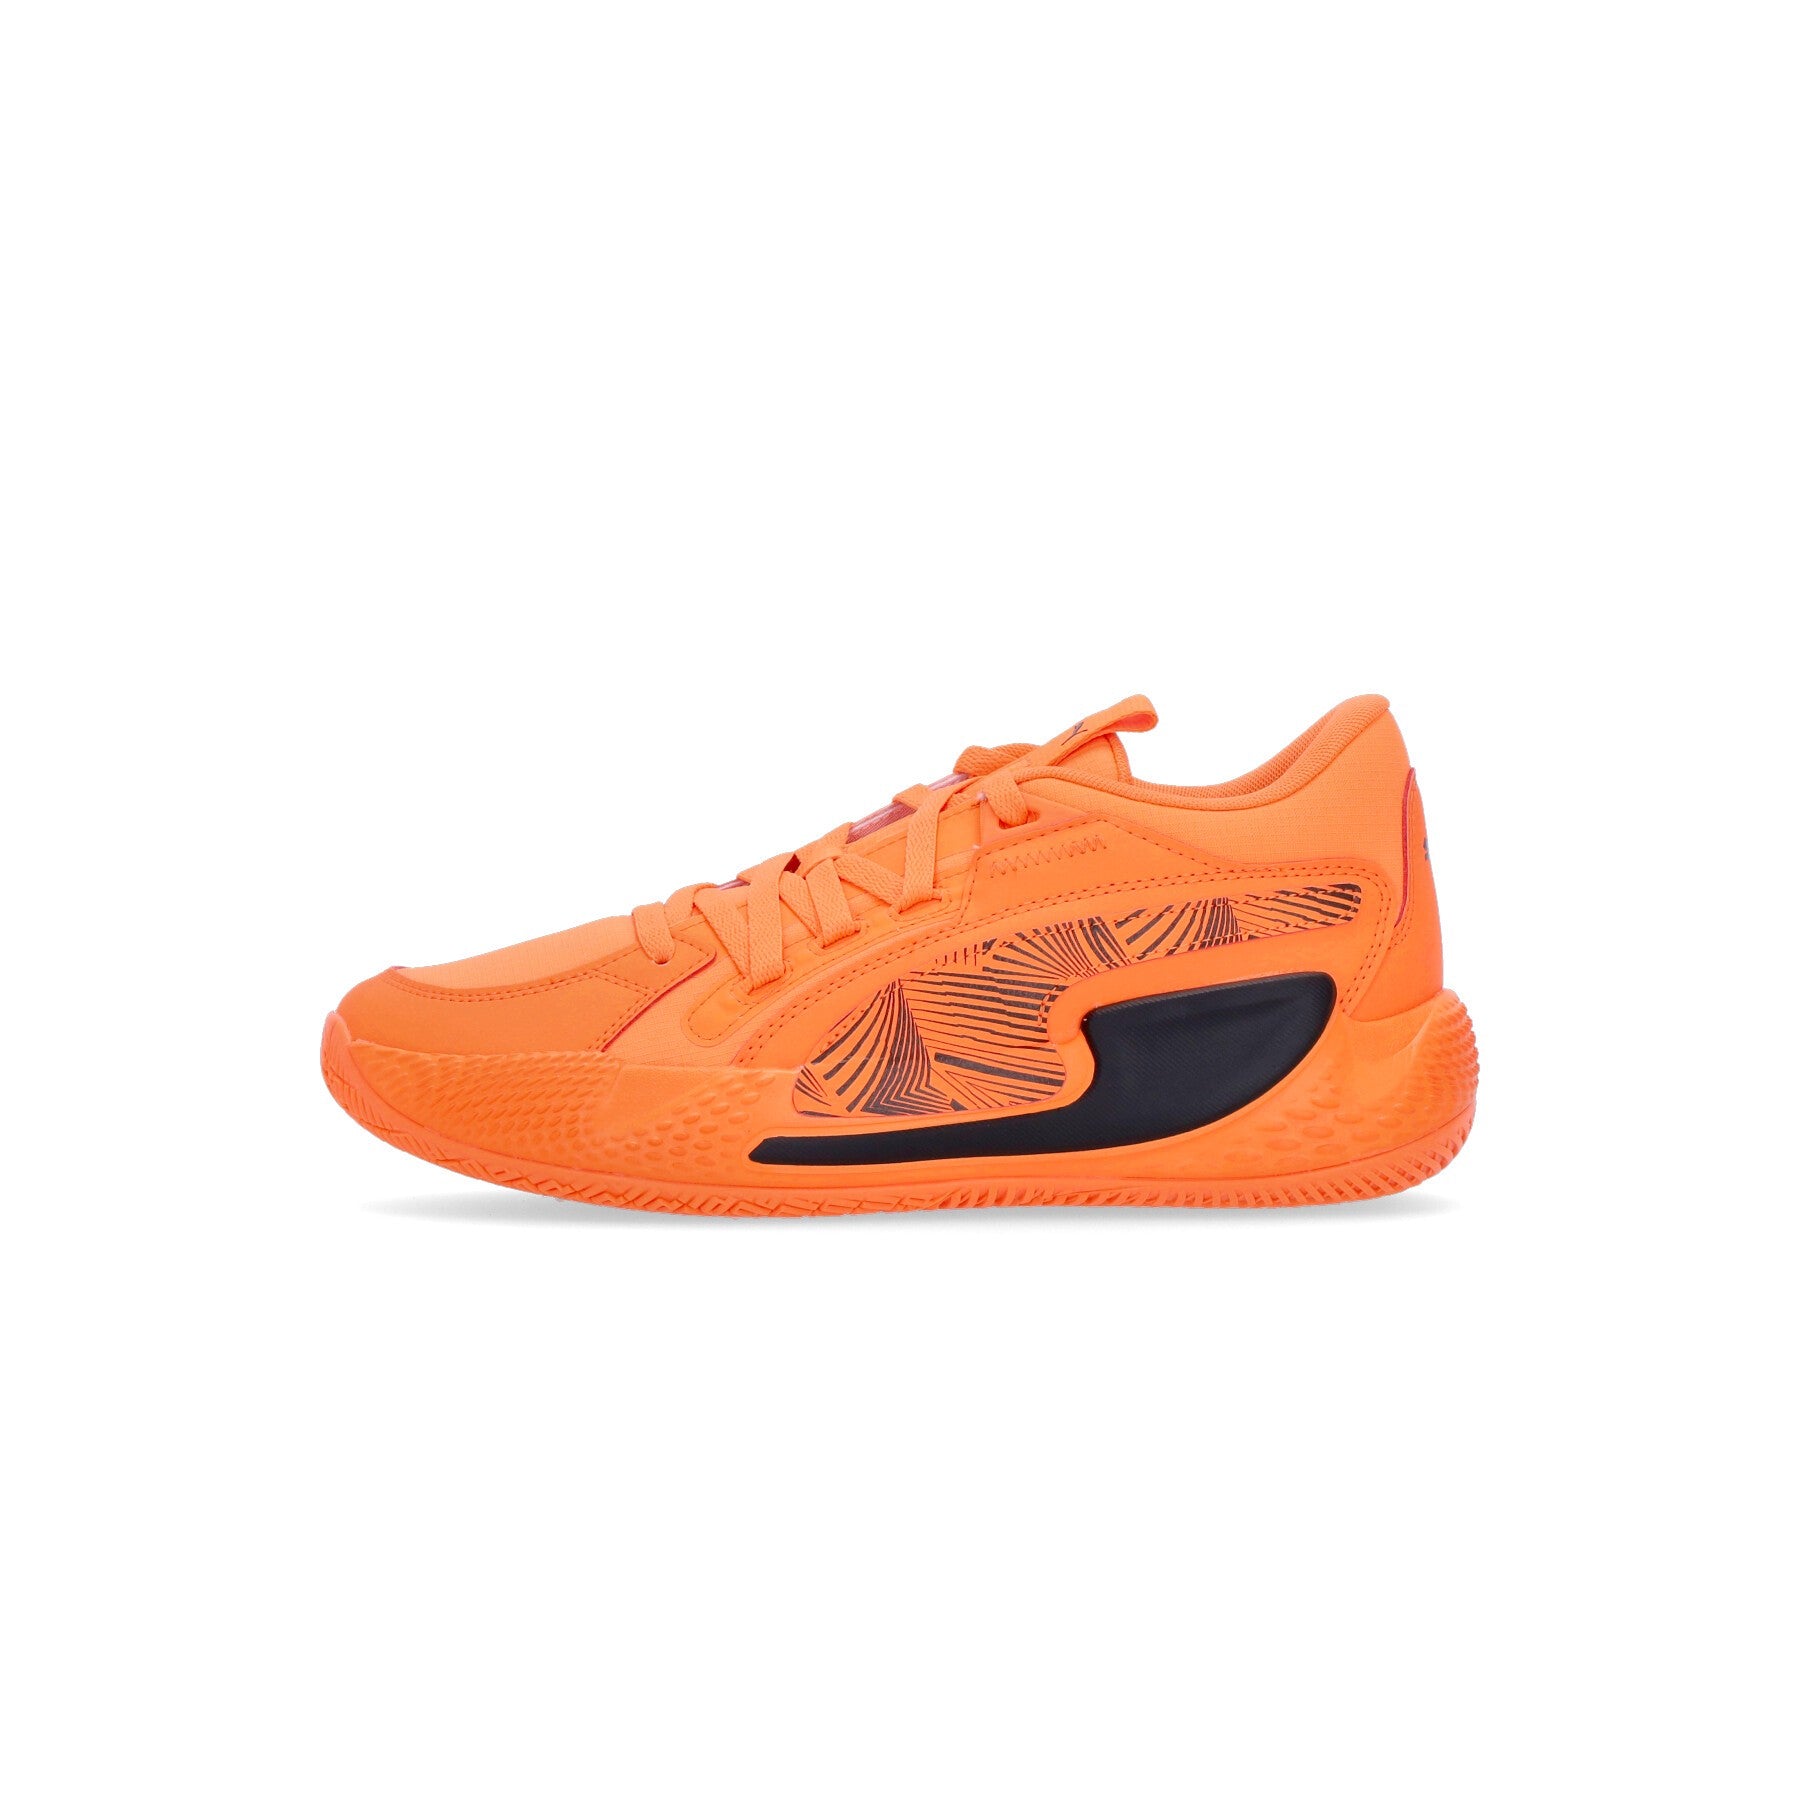 Puma, Scarpa Basket Uomo Court Rider Chaos Laser, Ultra Orange/clementine